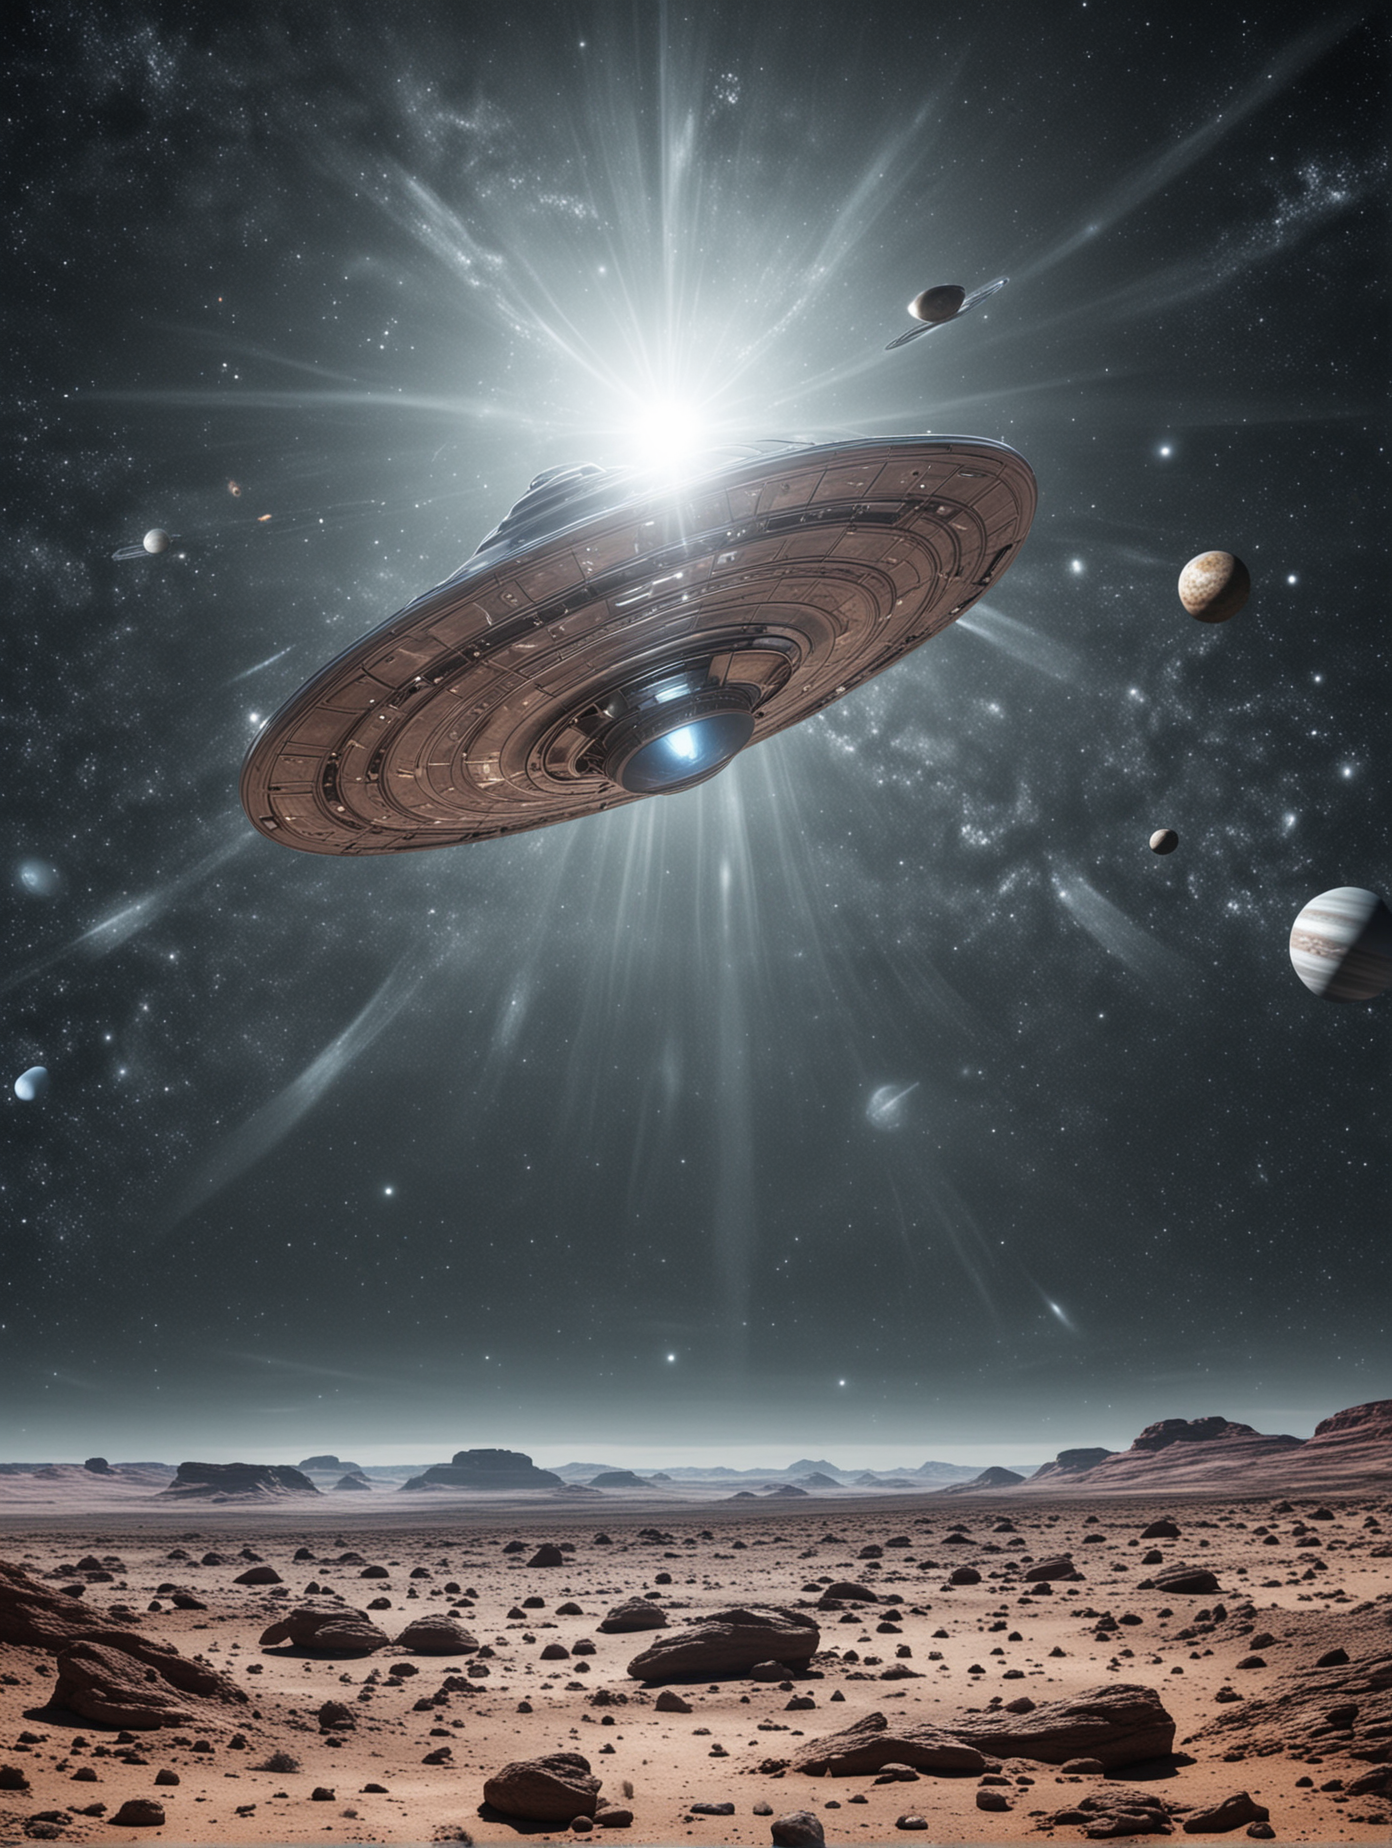 silver flying saucer in a random solar system

